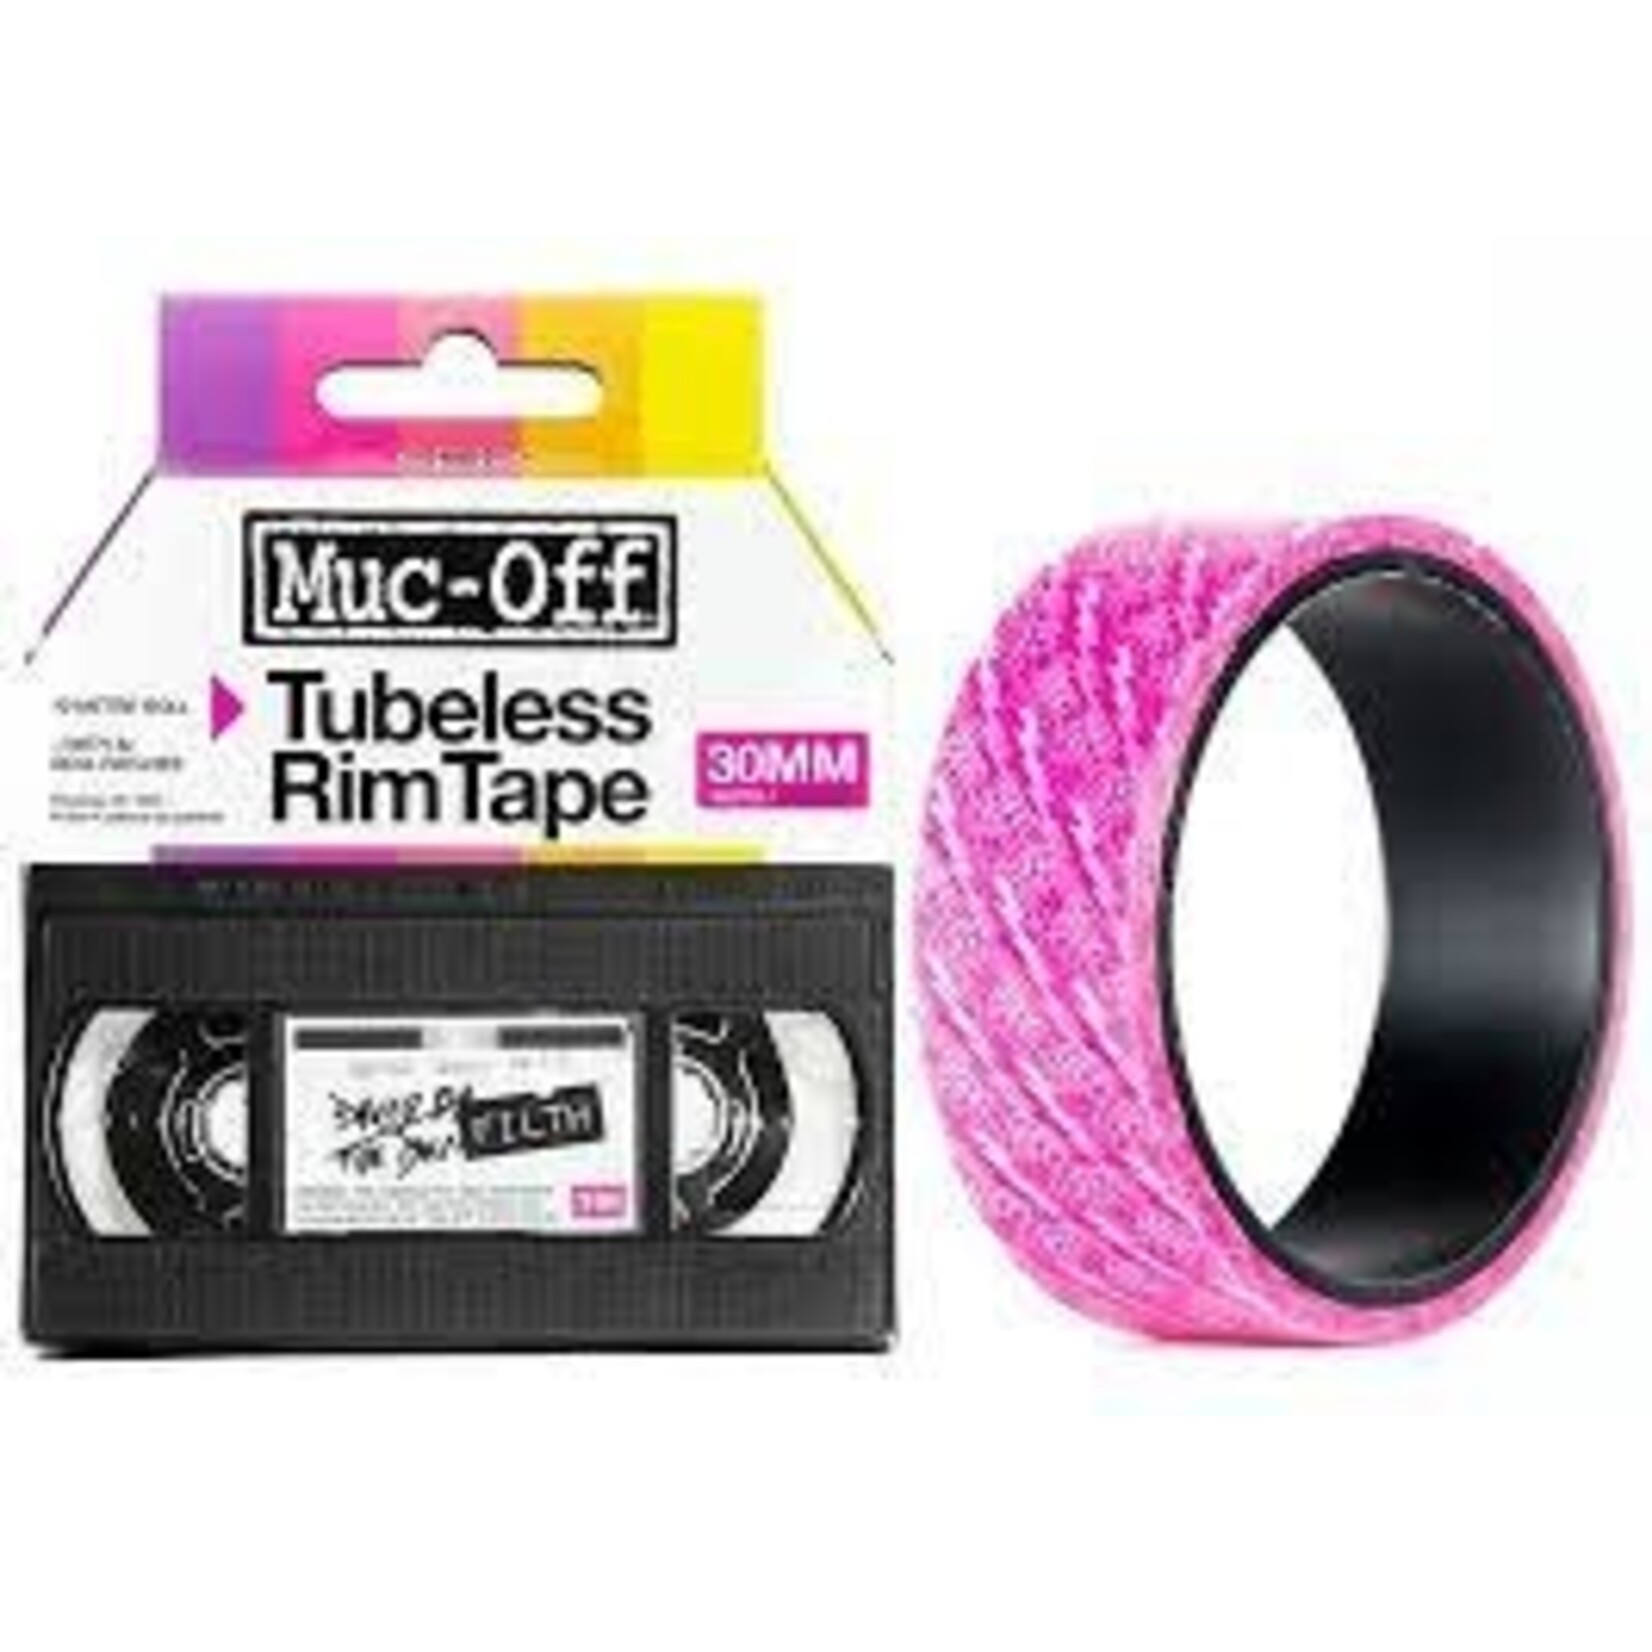 Muc-Off MUC-OFF Tubeless Rim Tape